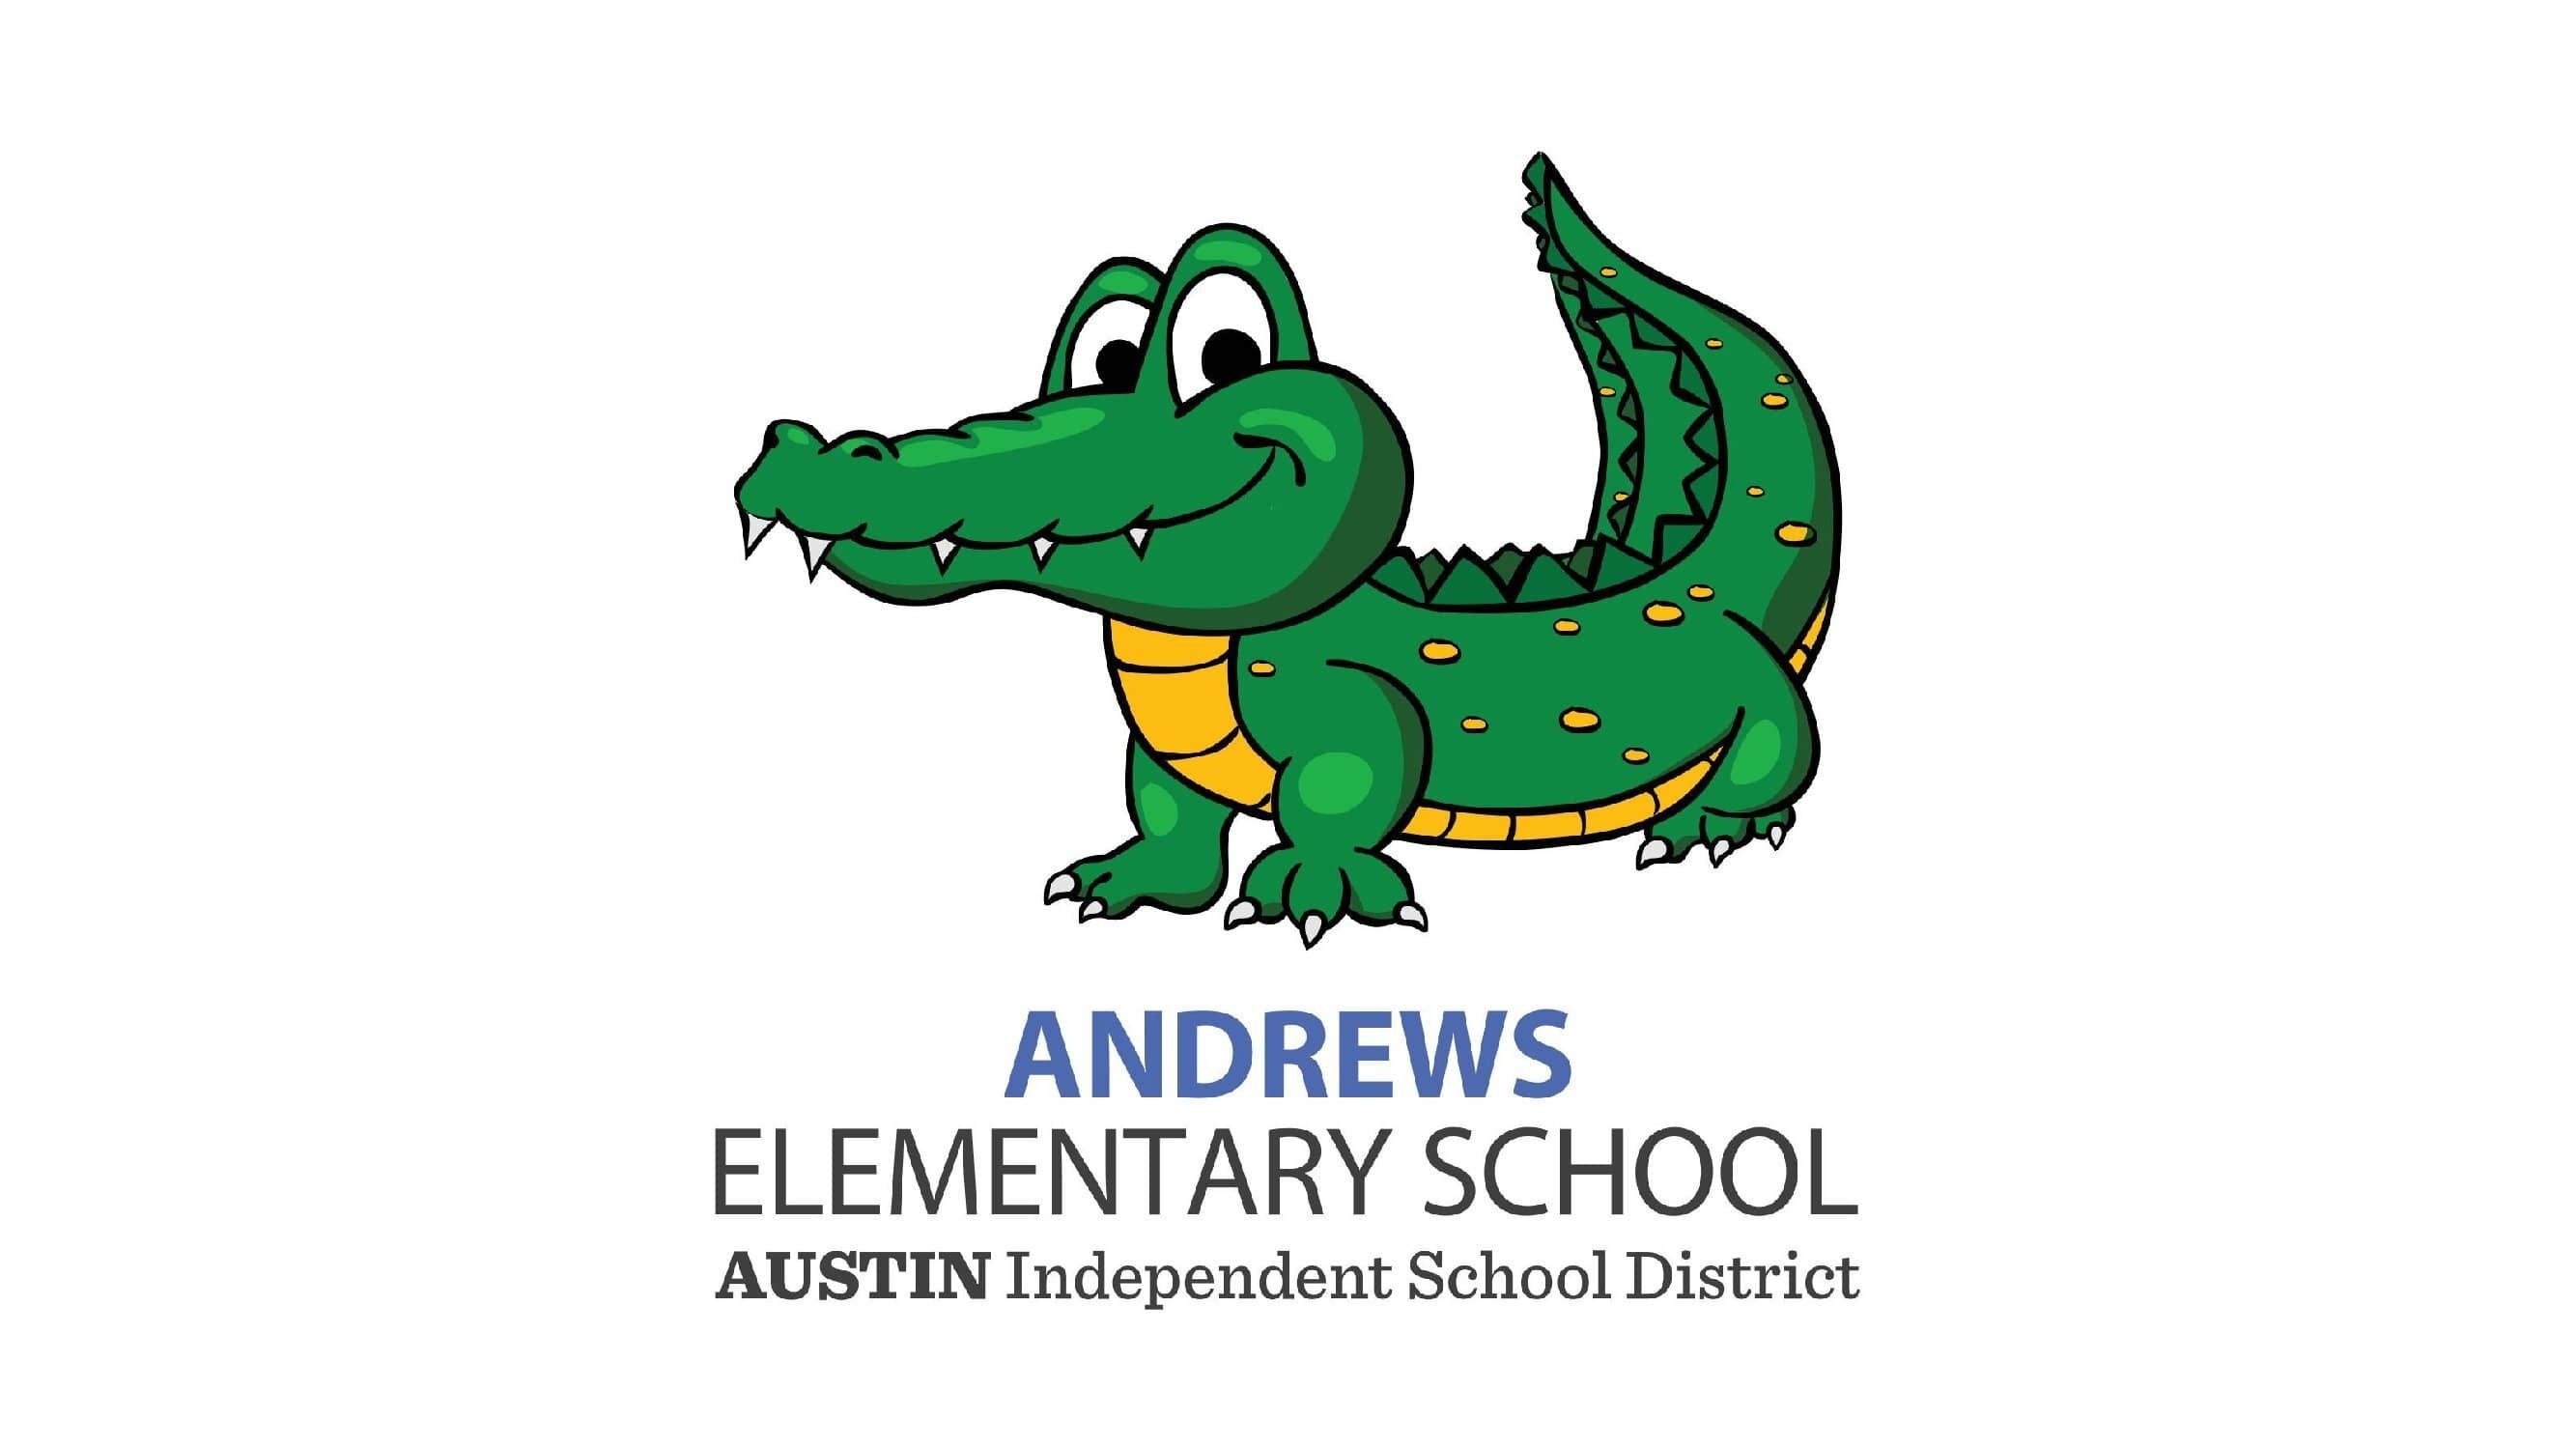 Andrews Elementary School